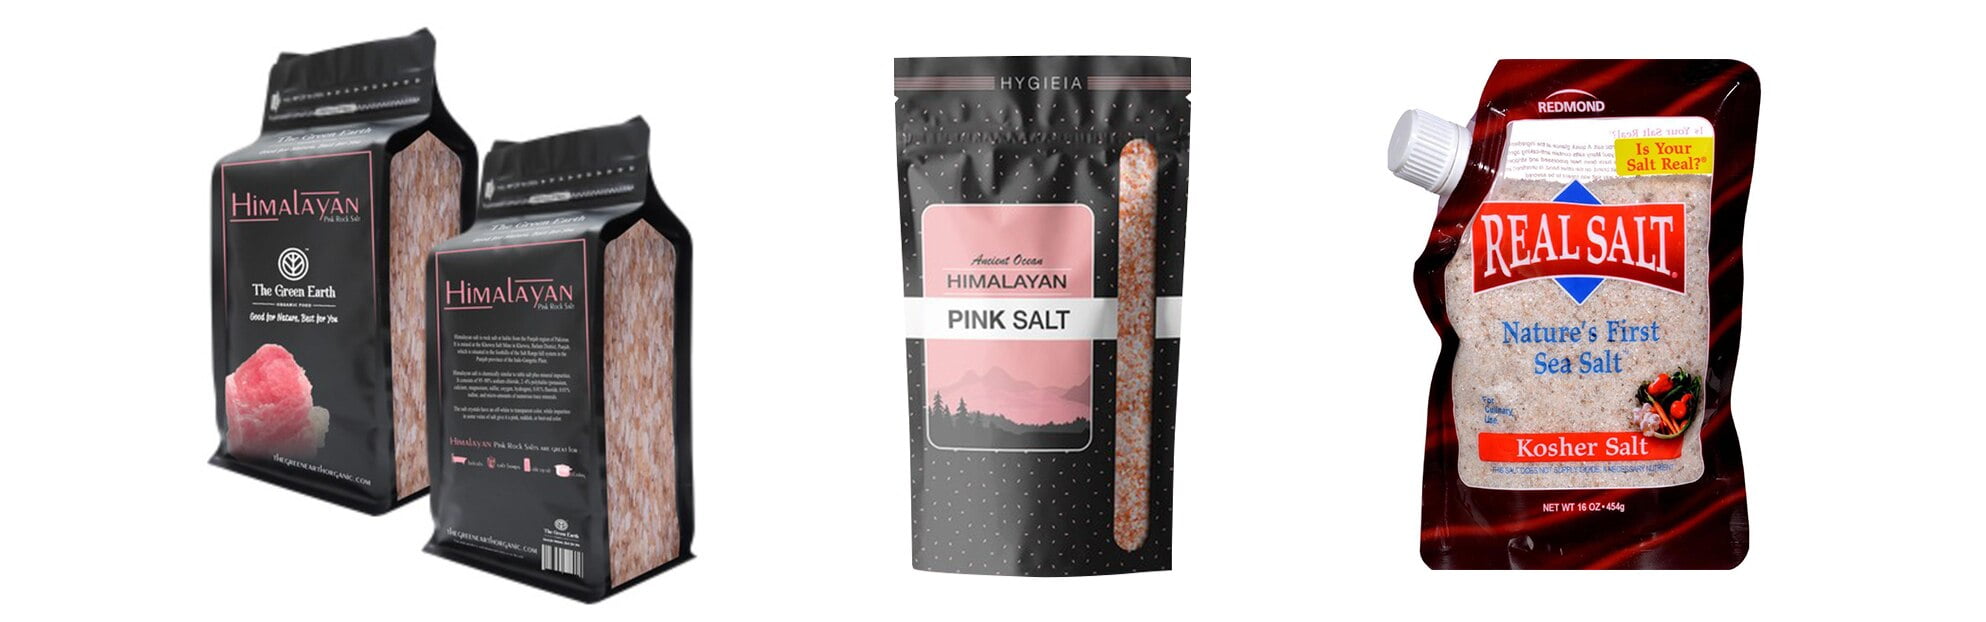 matte-black-box-bottom-pouch-bags-salt-pouches-with-spout.jpg